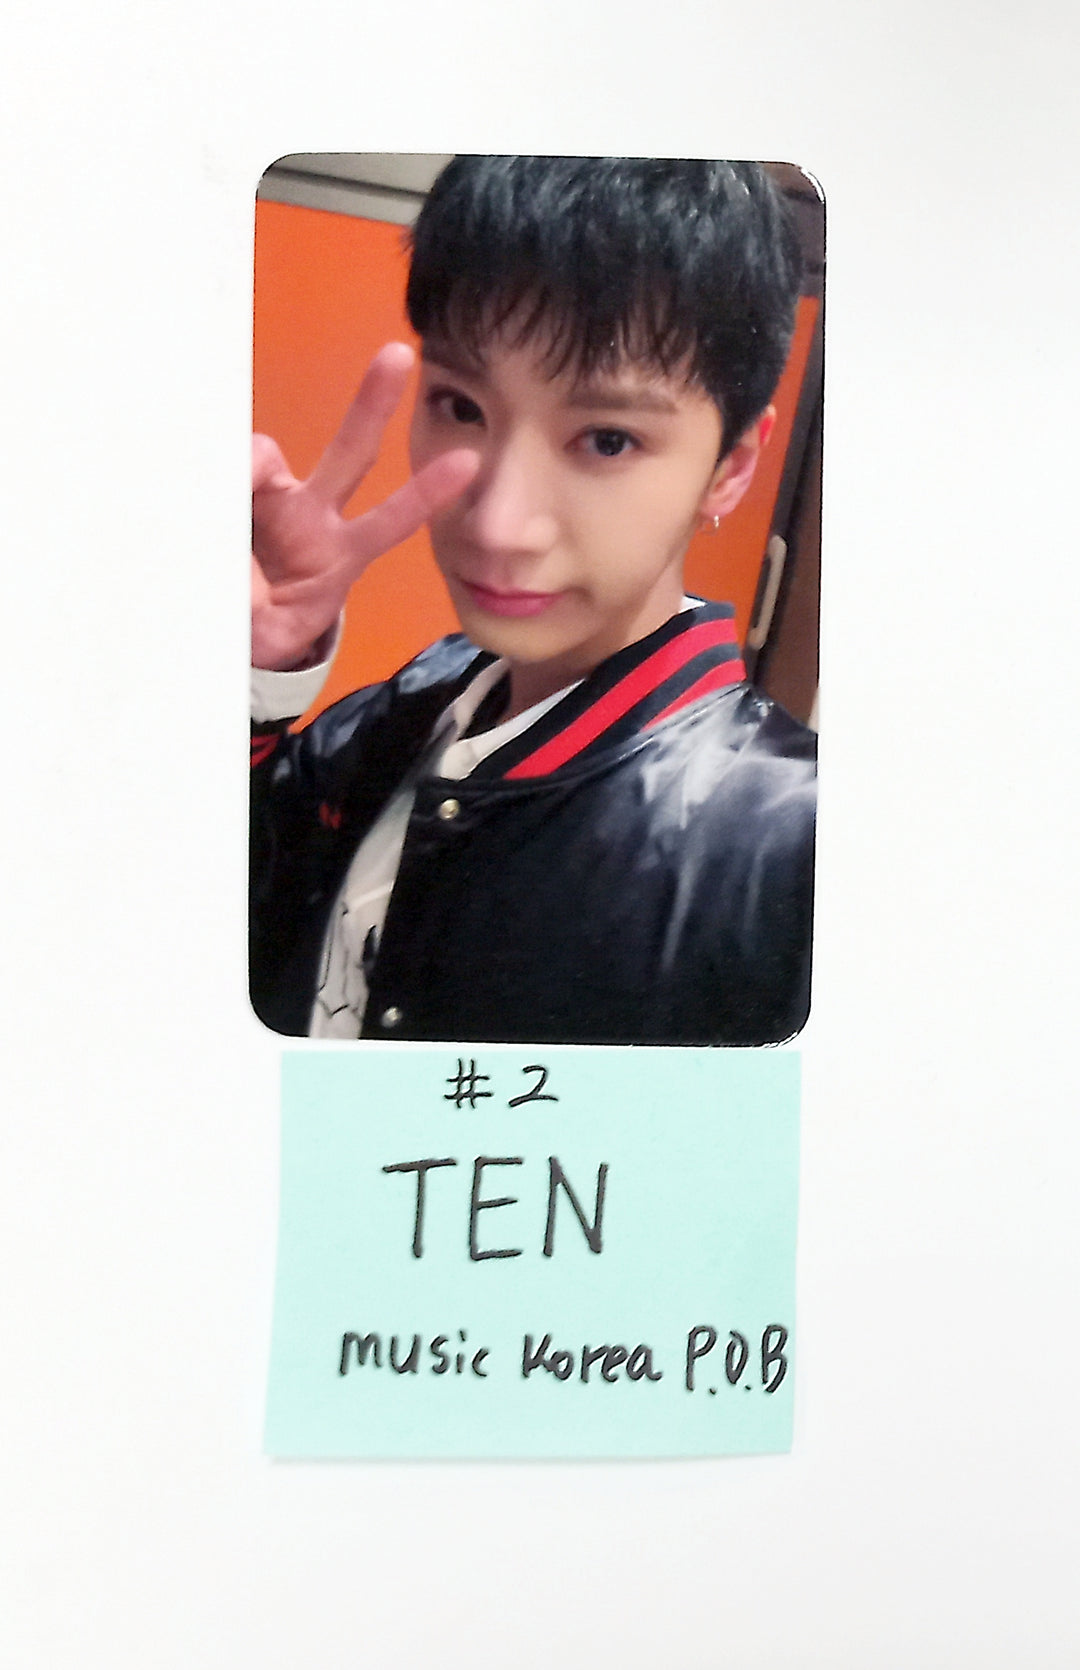 TEN 1st Mini "TEN" - Music Korea プレオーダー特典フォトカード [24.02.20]